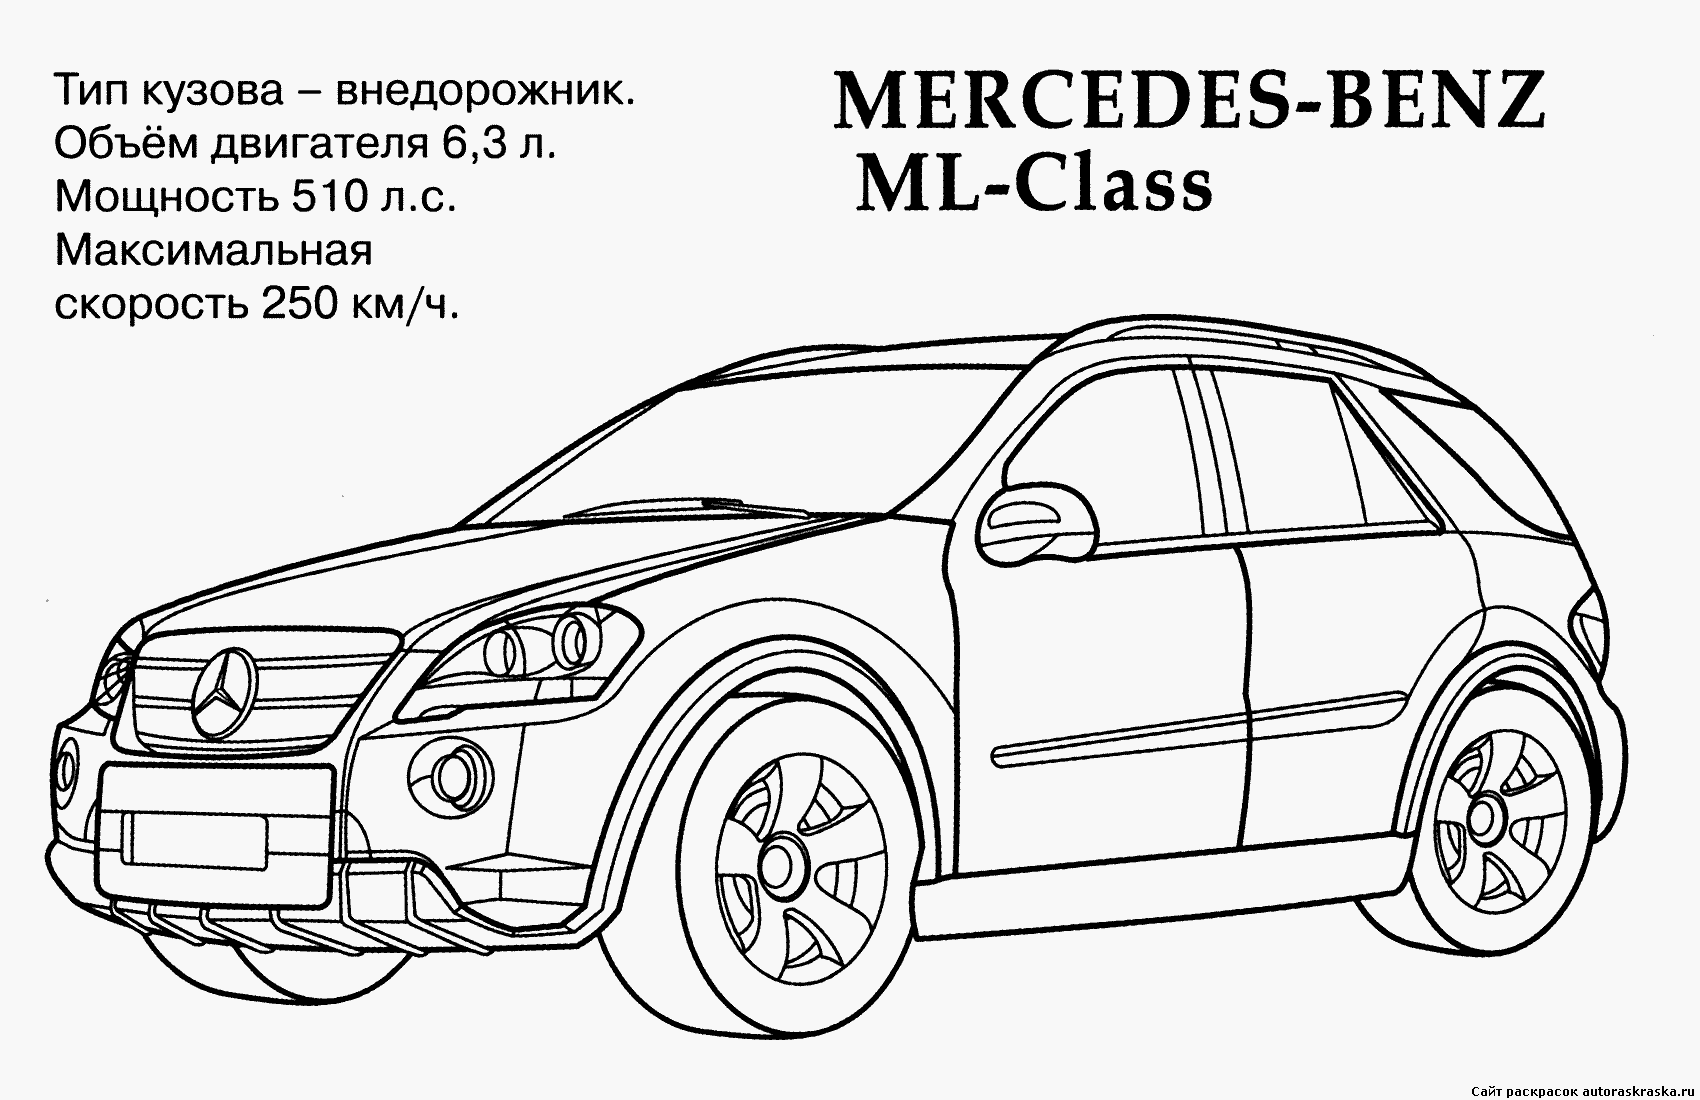  раскраски с машинами Mercedes Benz       раскраски на тему машины Mercedes Benz   для детей. Интересные раскраски с машинами Mercedes Benz   для мальчиков и девочек. Mercedes Benz      